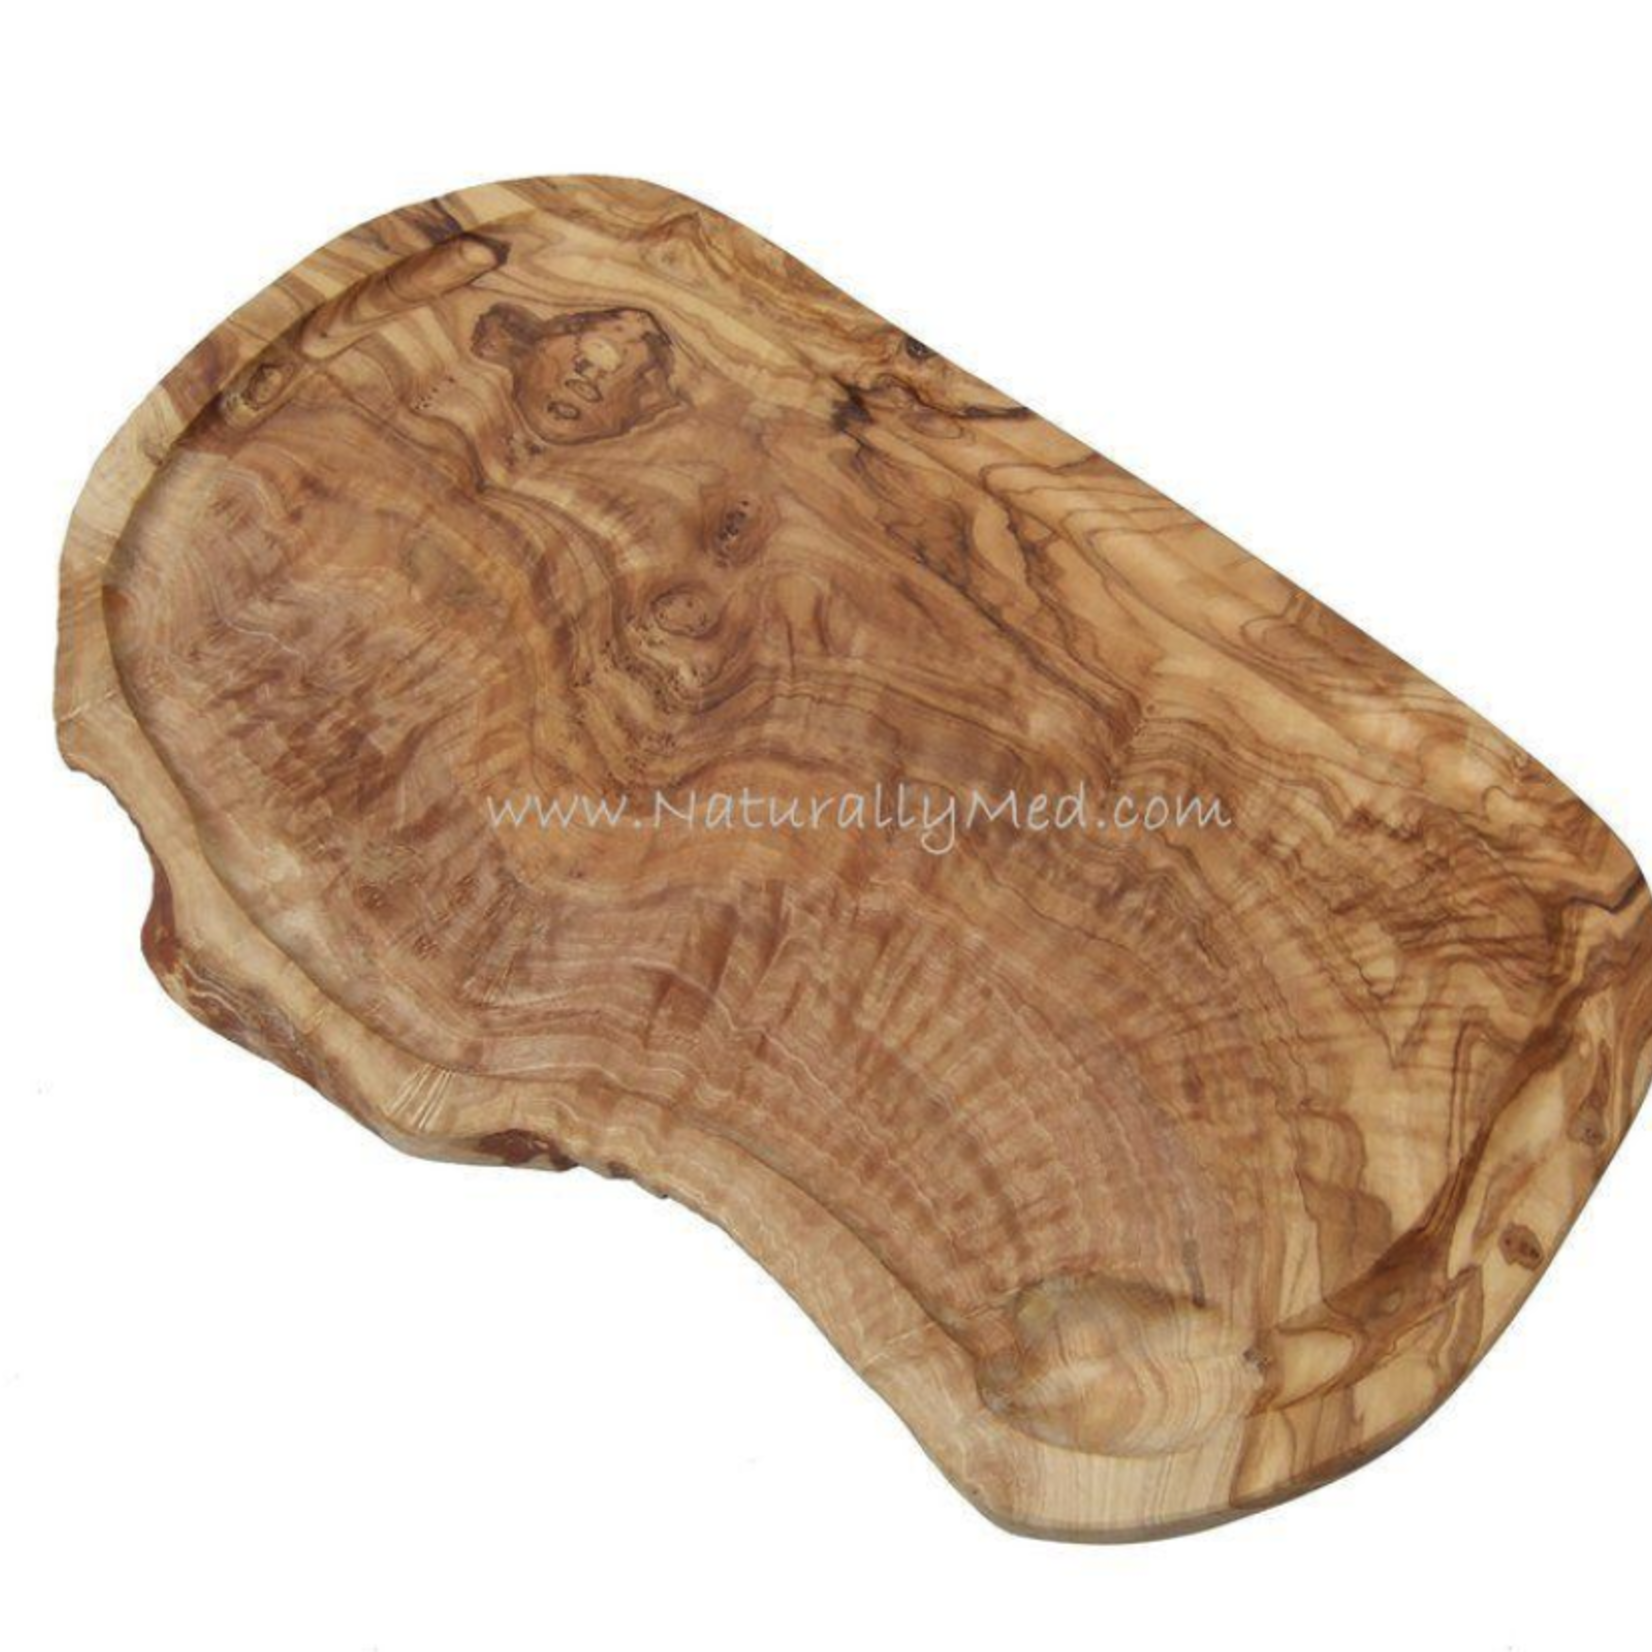 Naturally Med Olive Wood Carving Boards / Steak Boards - 19.5"